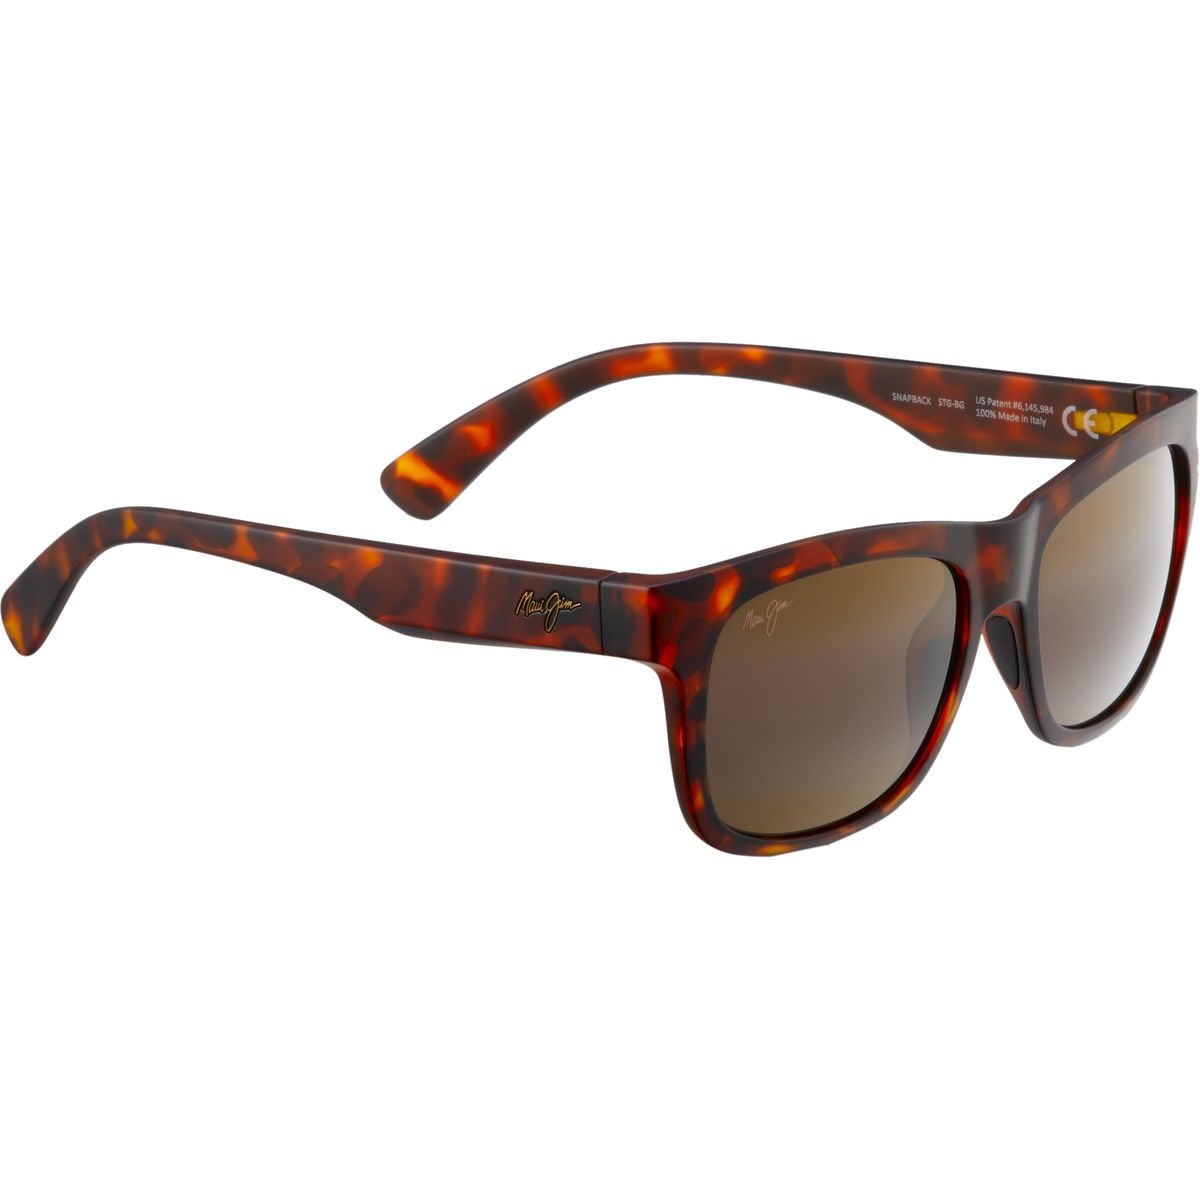 Maui Jim Snapback Sunglasses - Polarized | eBay